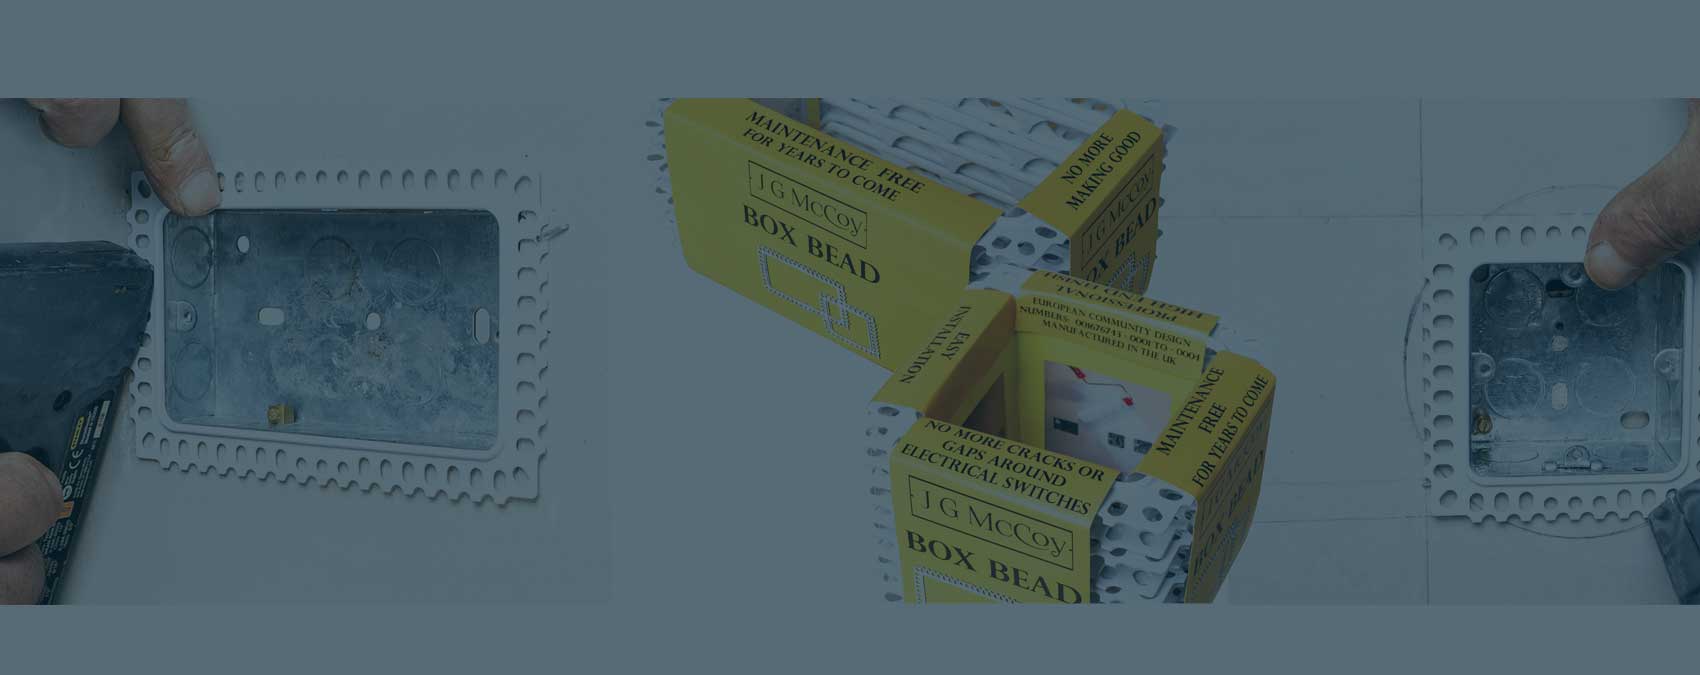 Box Bead Installation – Refurb